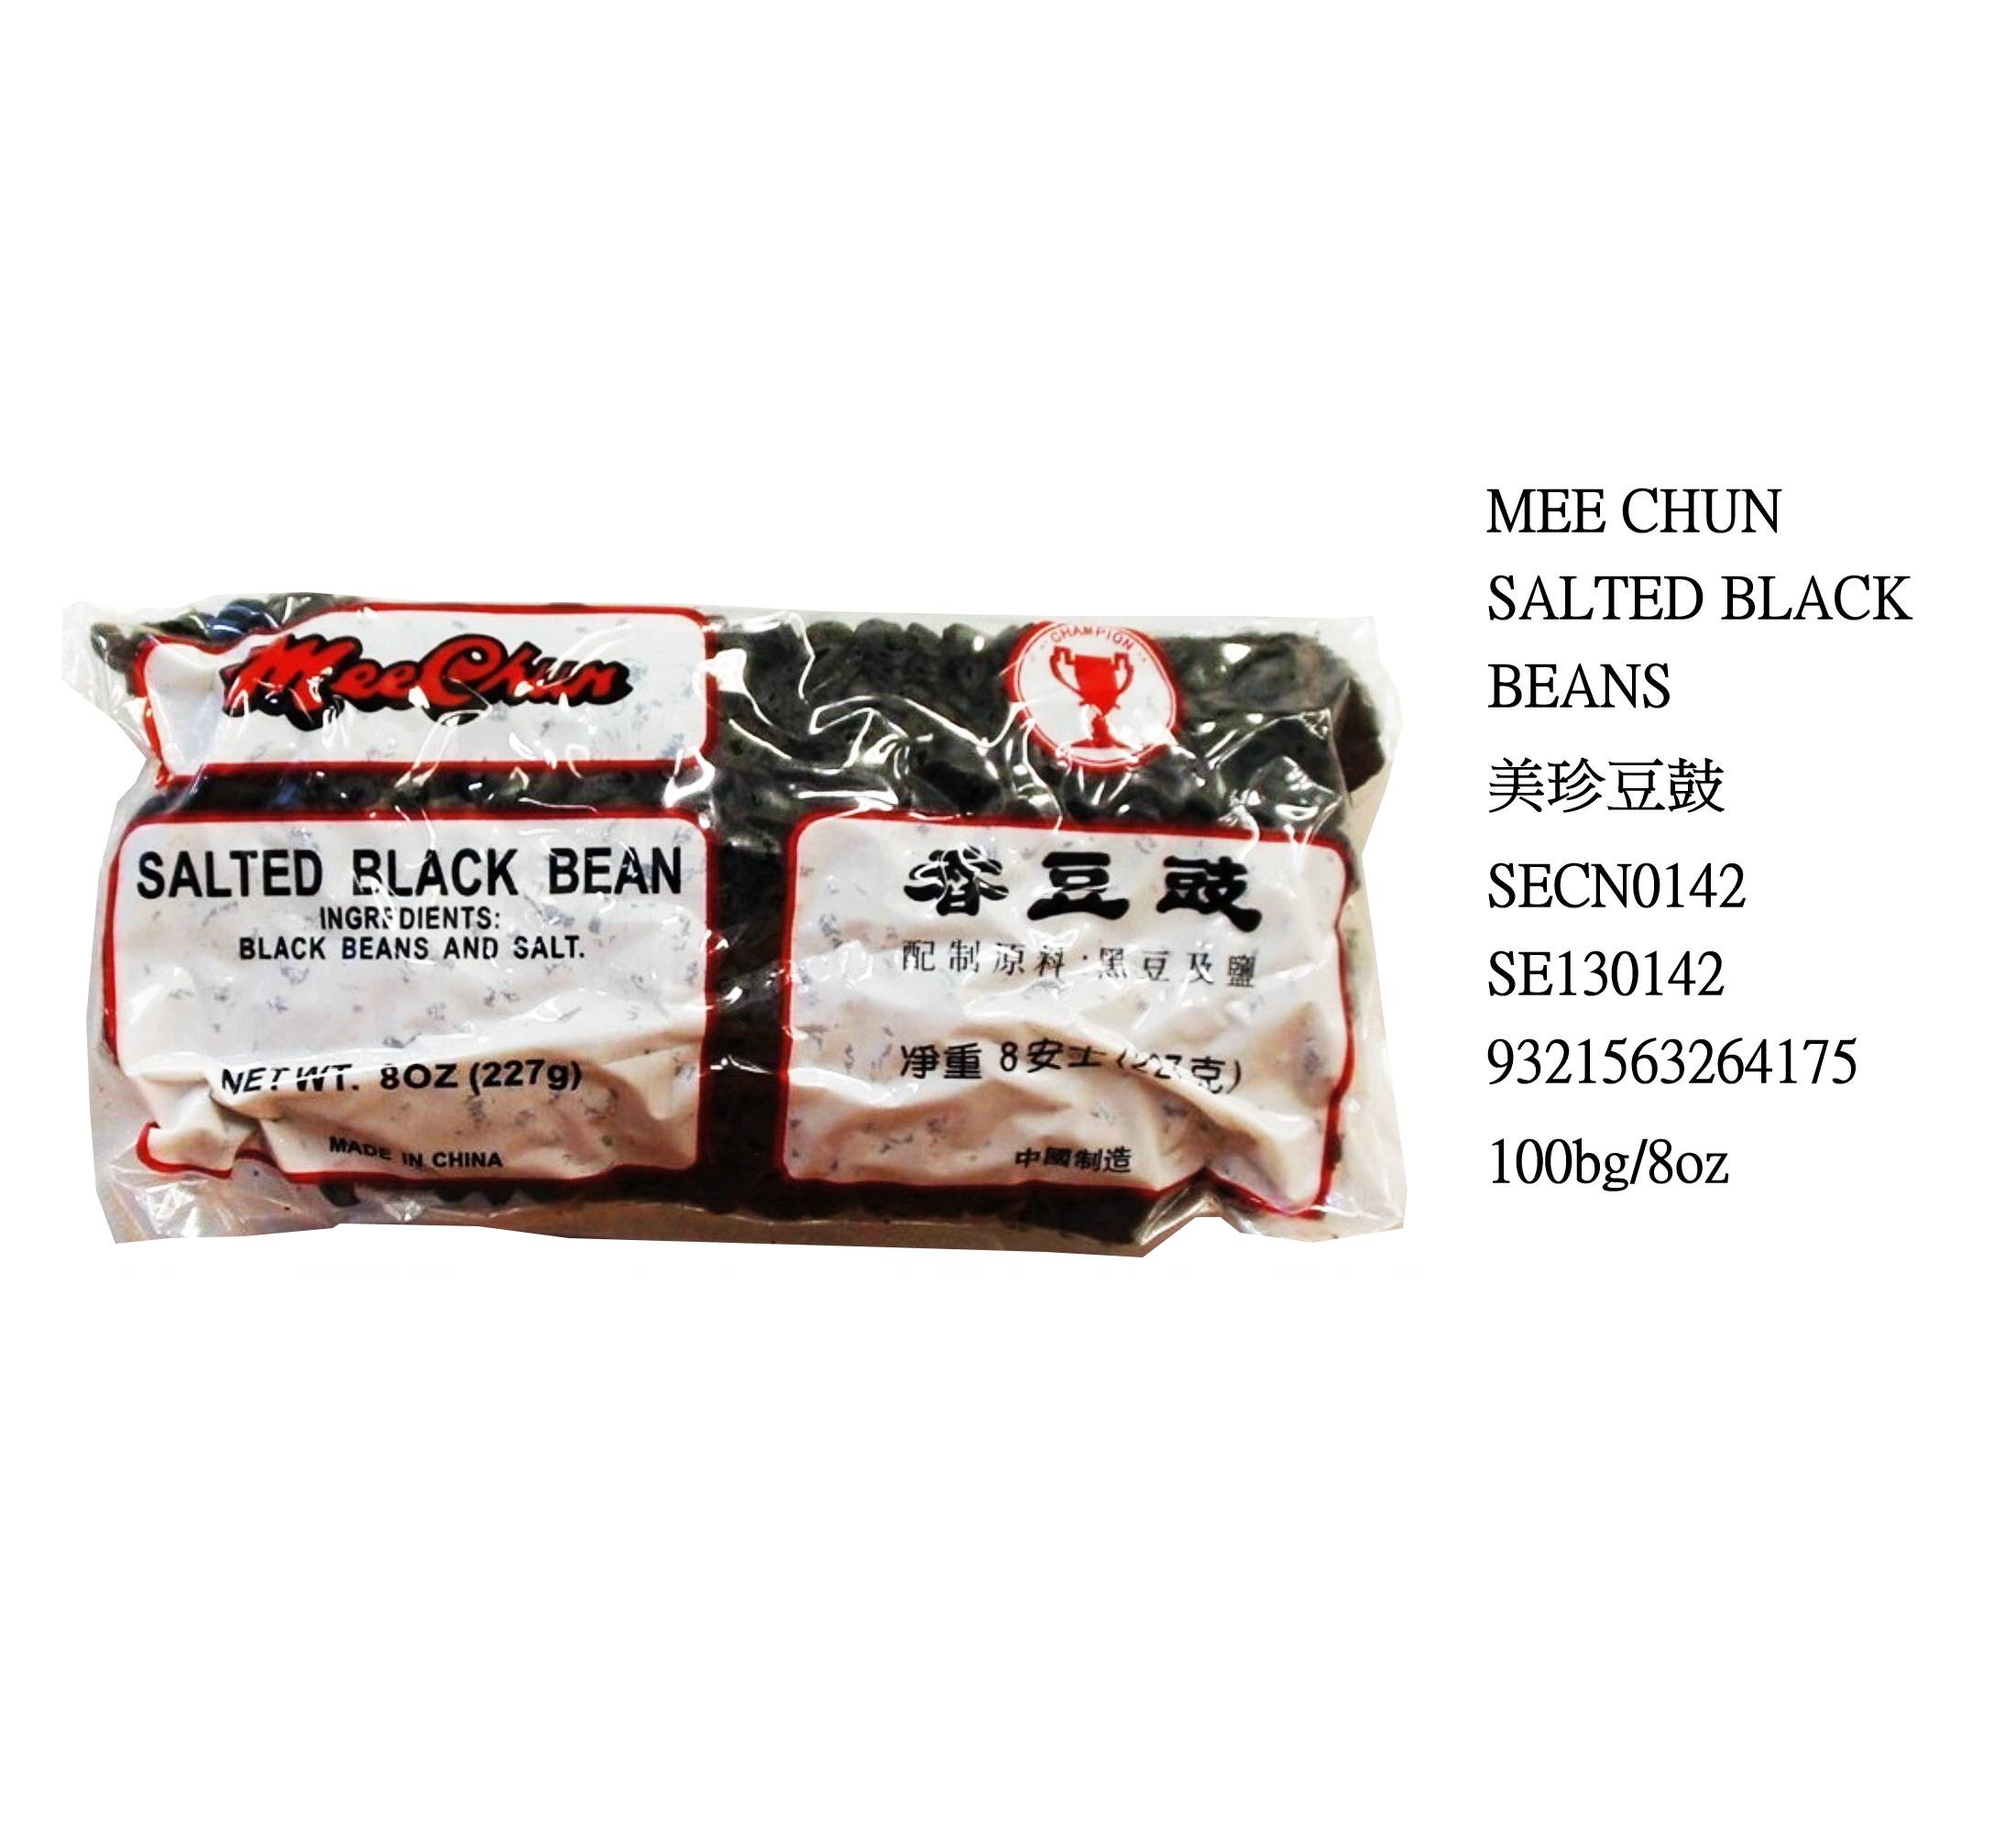 MEE CHUN SALTED BLACK BEANS SE130142